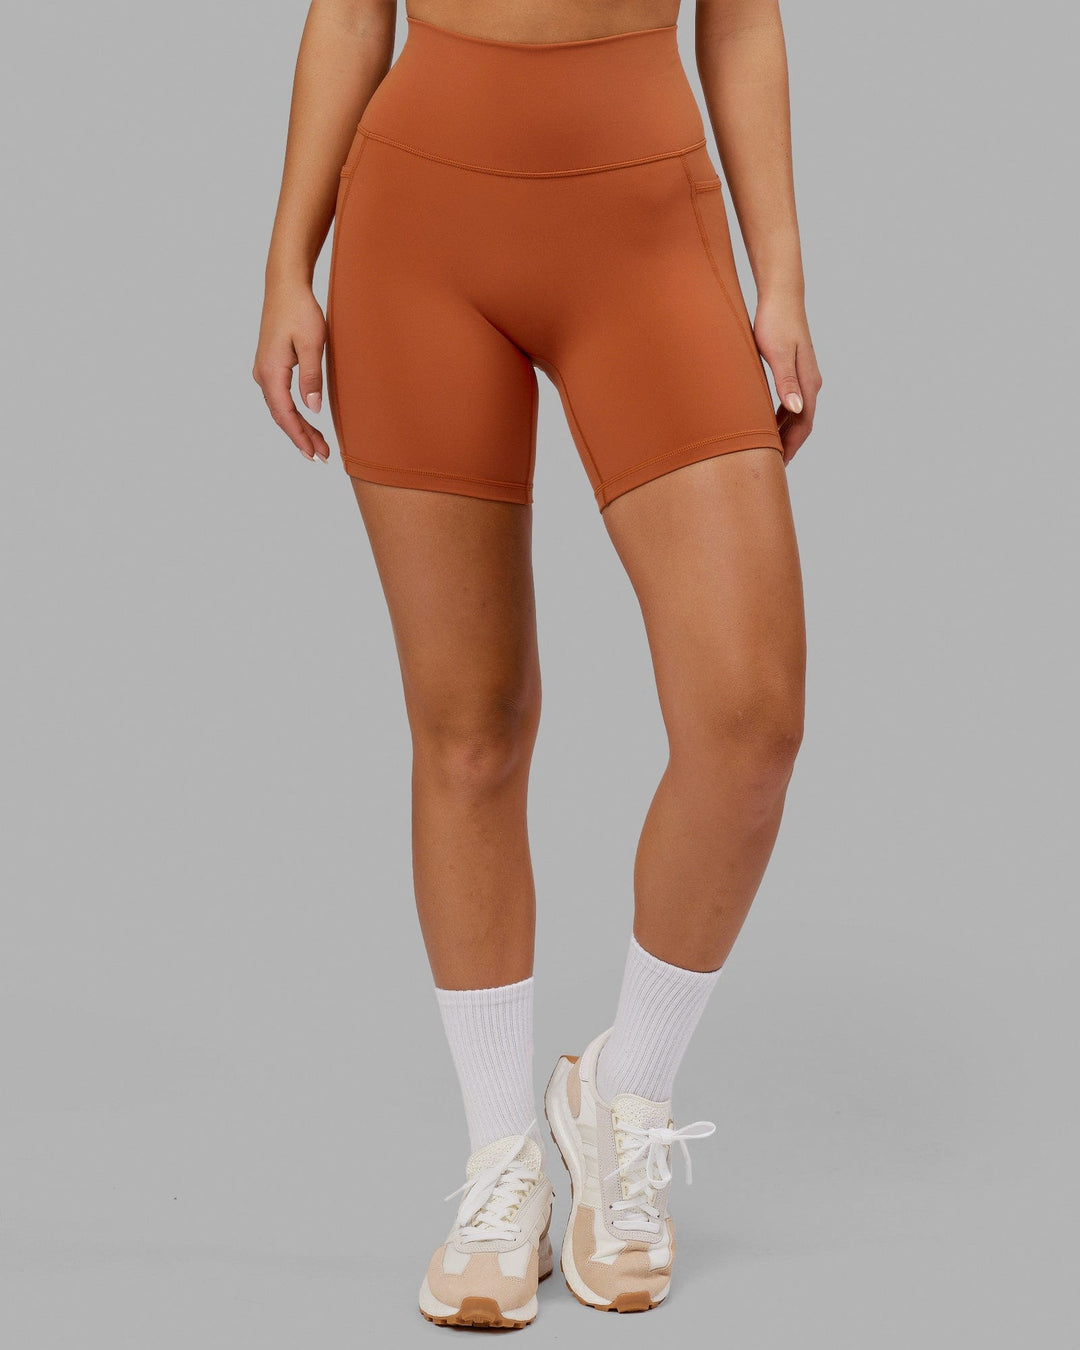 Model wearing Fusion Mid Short Tight - Auburn